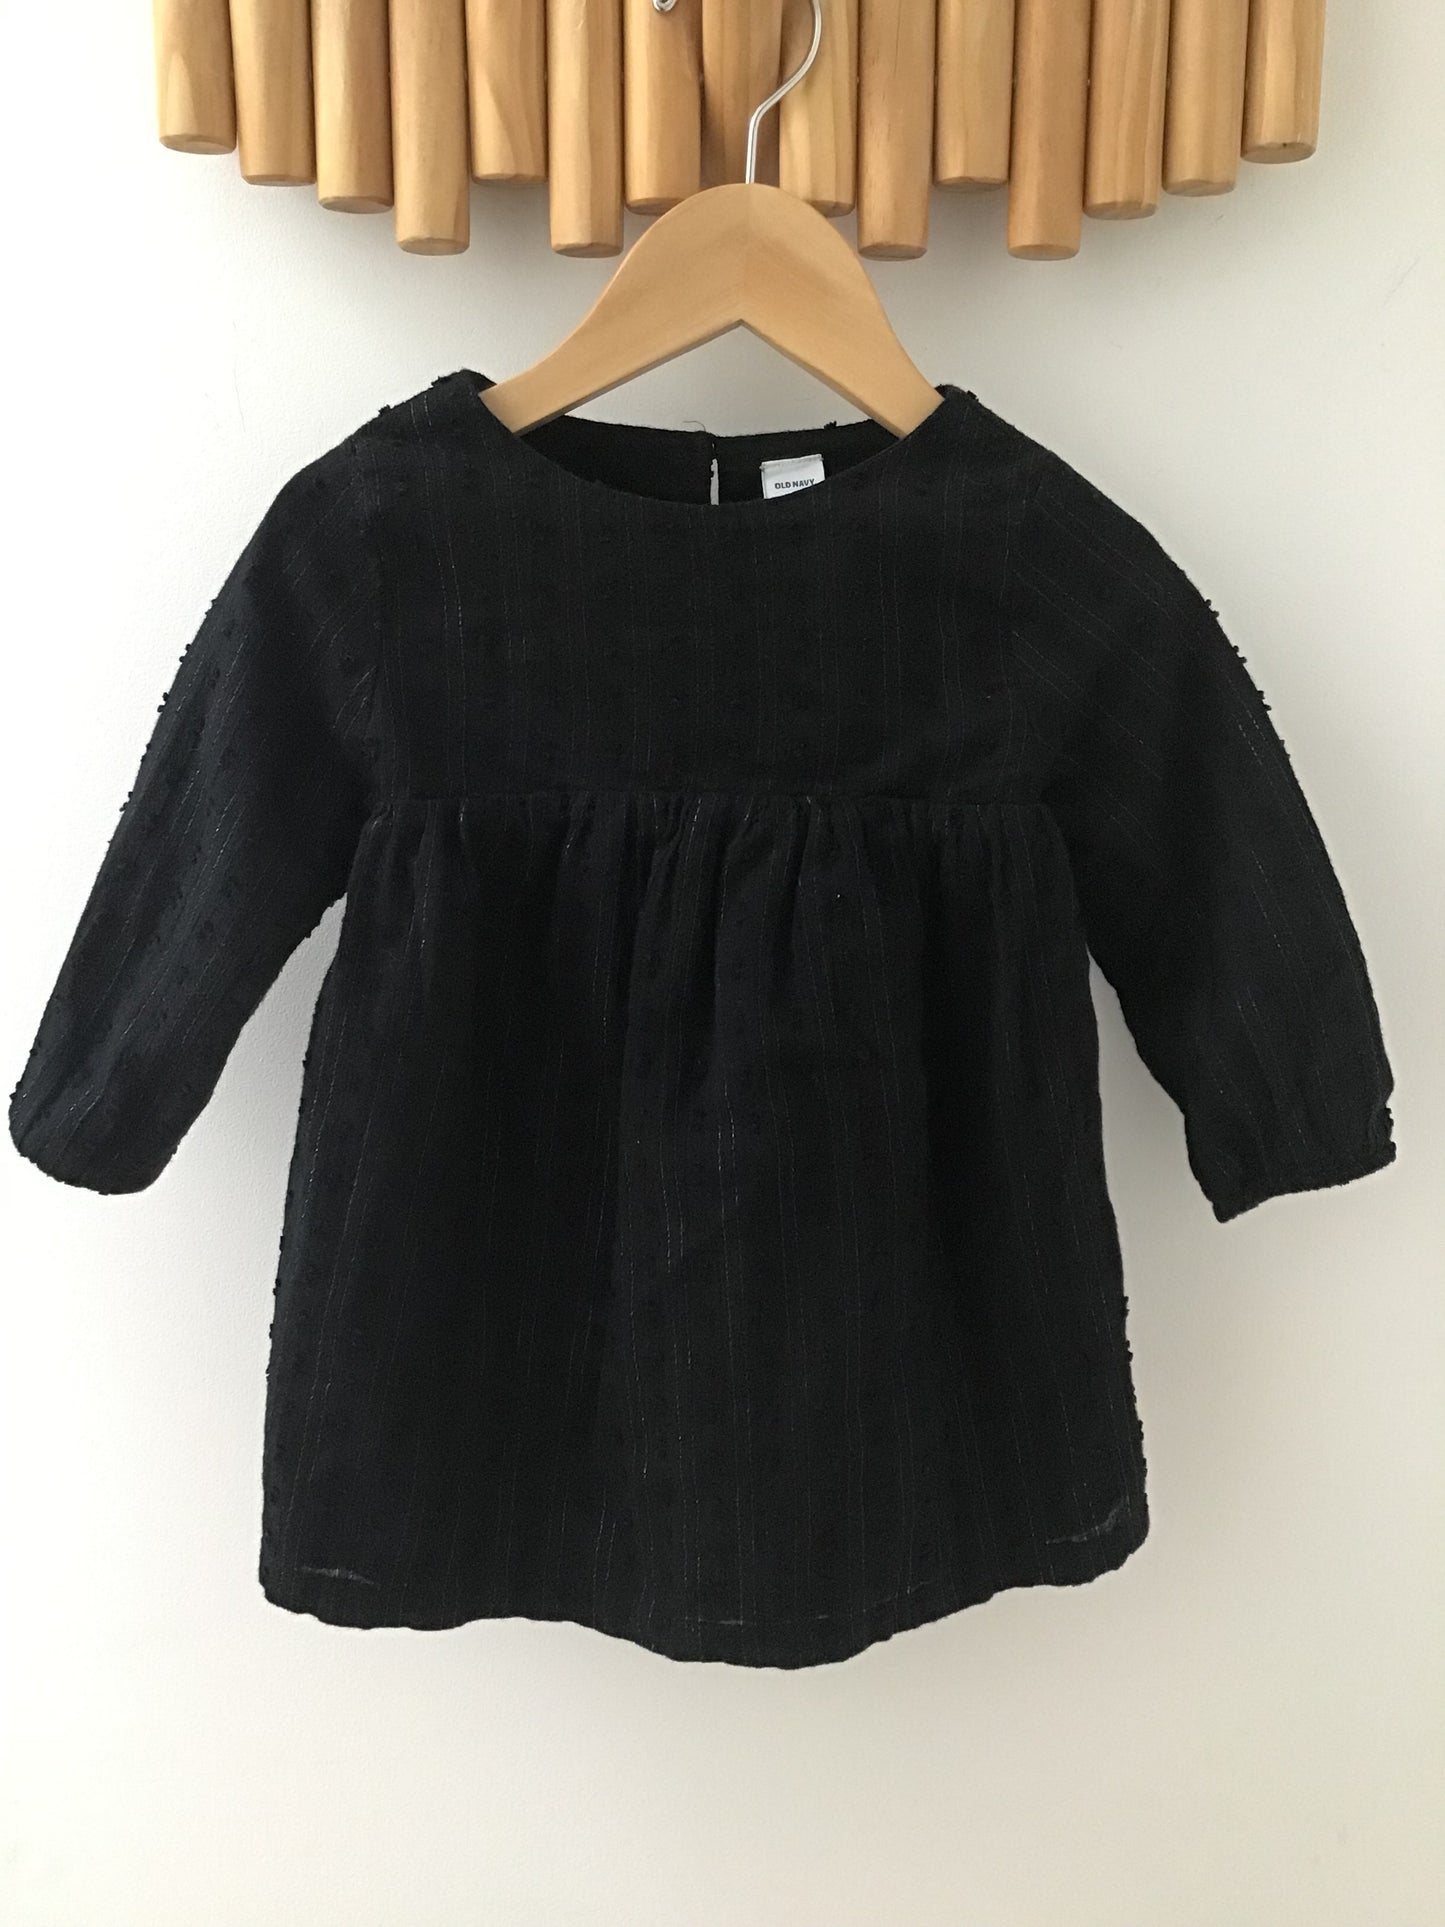 Black sparkle thread dress 18-24m